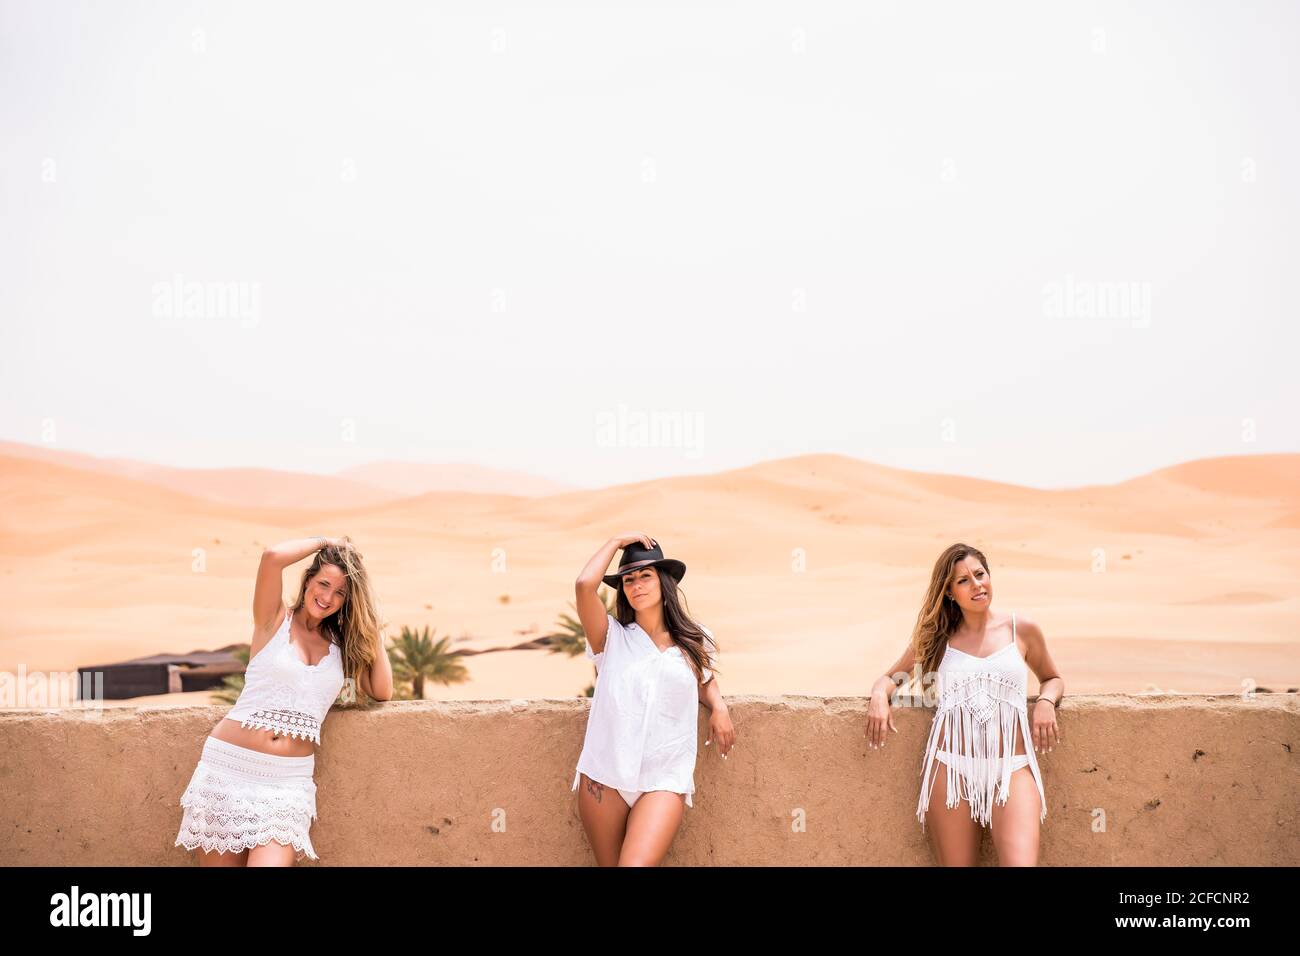 Row of women wearing white beachwear posing at stone fence on terrace against endless desert, Morocco Stock Photo